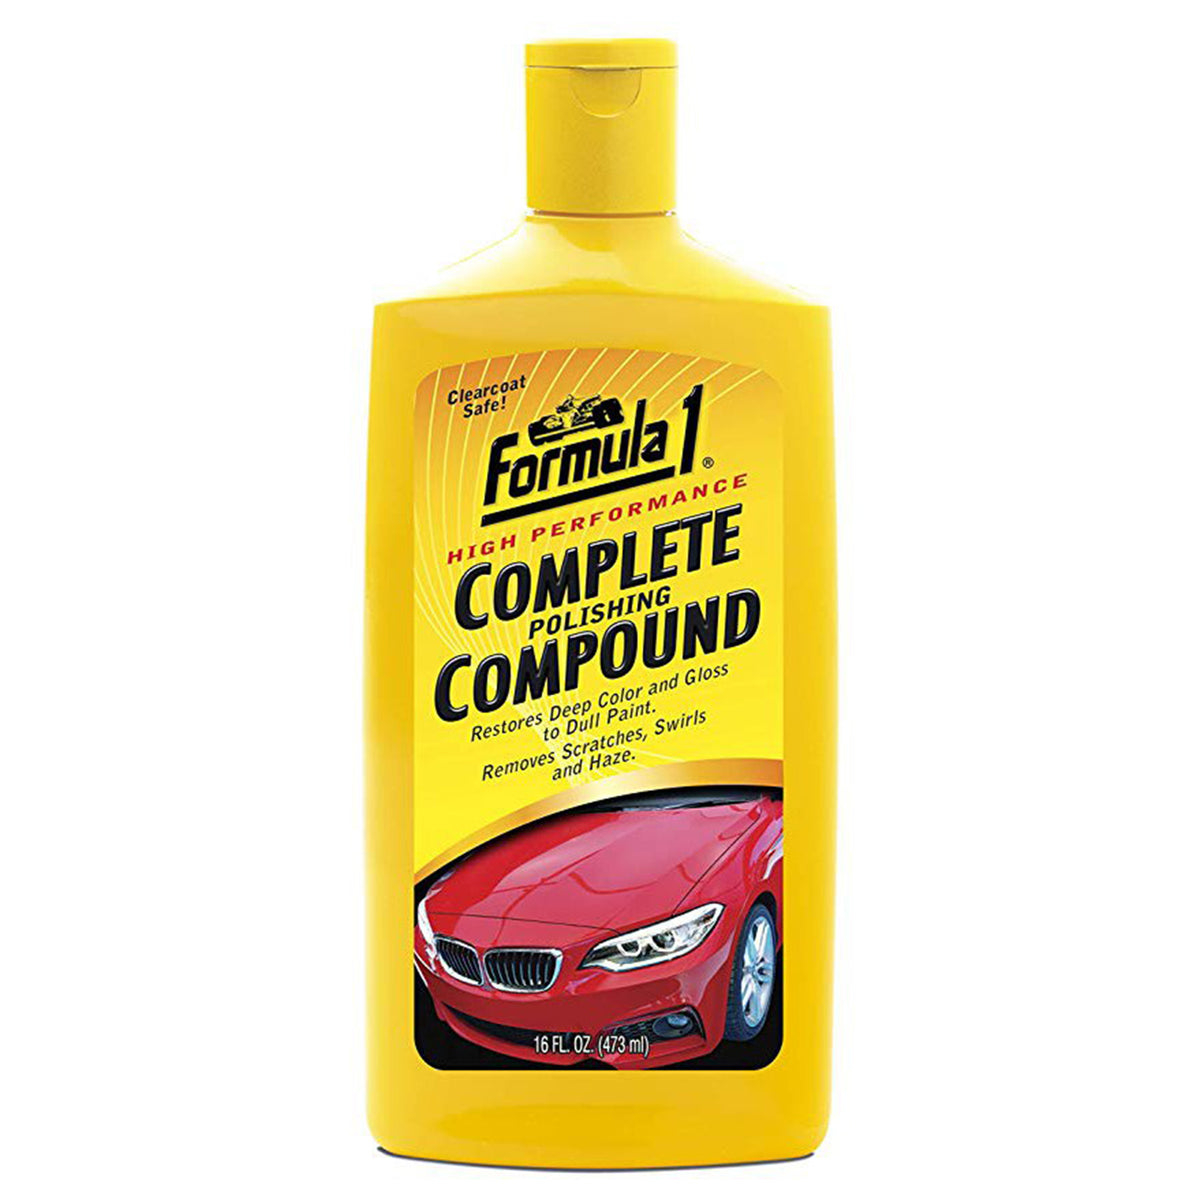 Heavy Car Polishing compoundCapacity: 473 ml